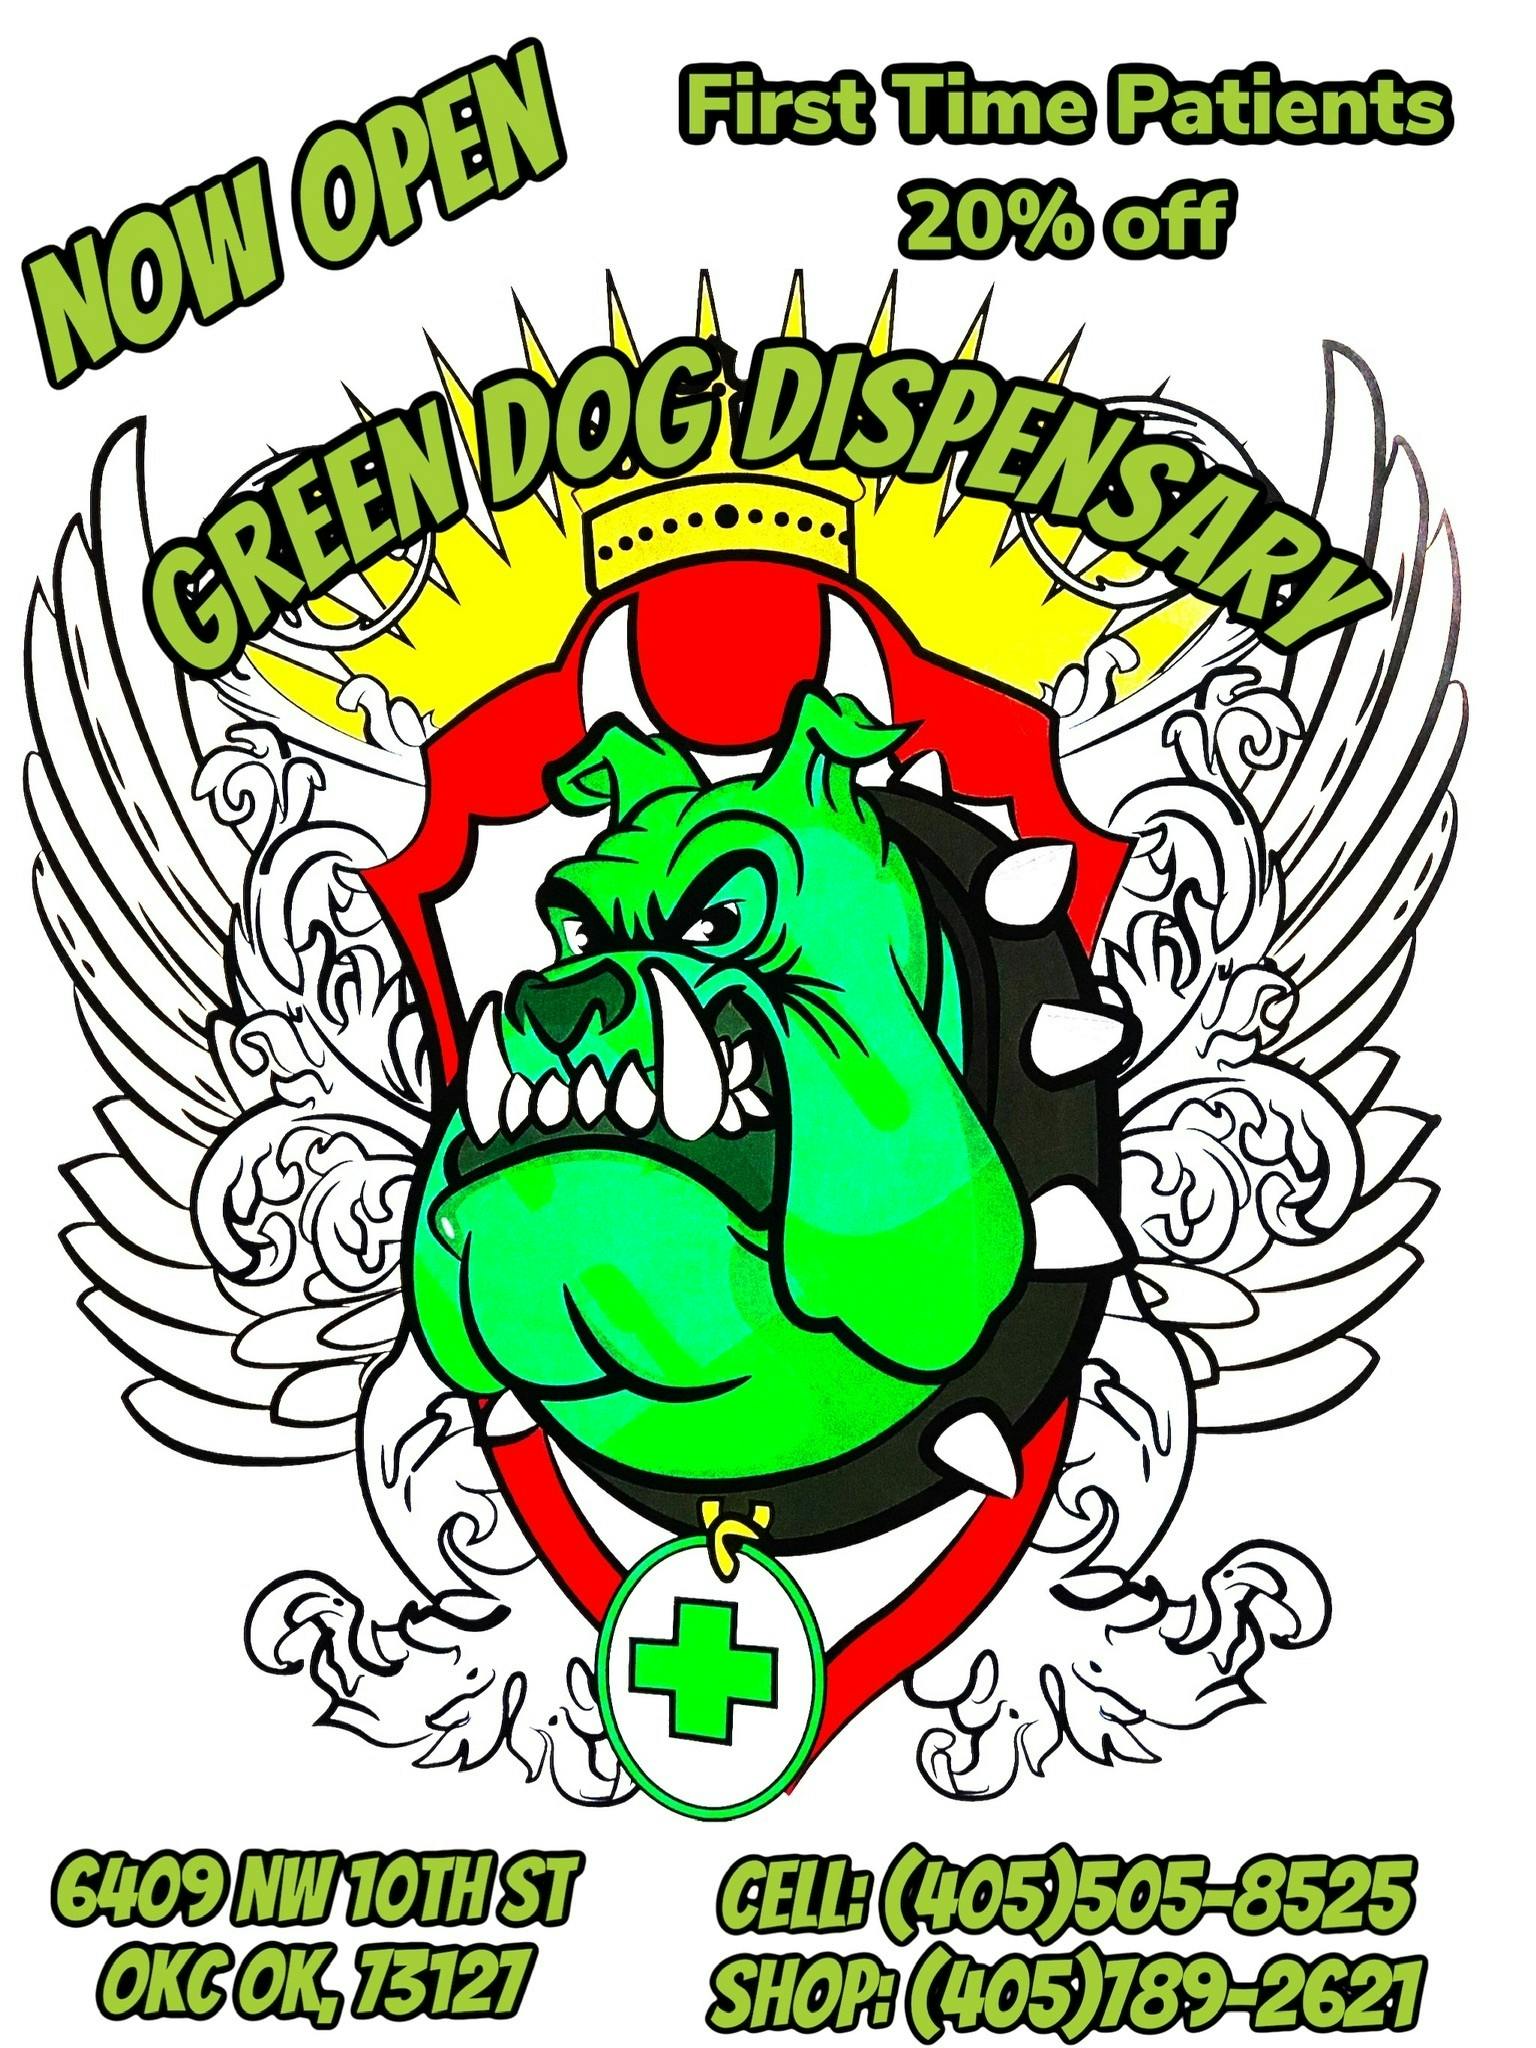 Green Dog Dispensary-logo